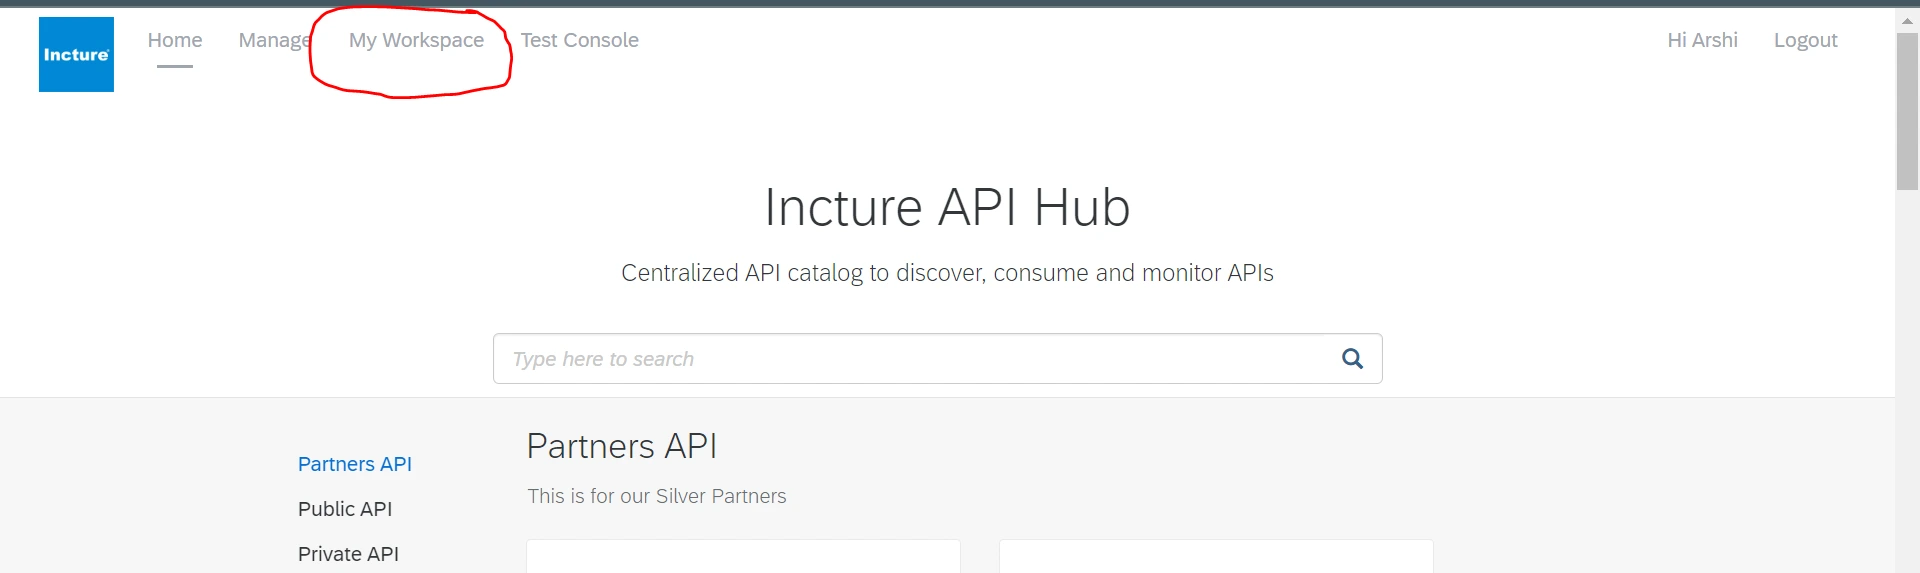 incture API Hub